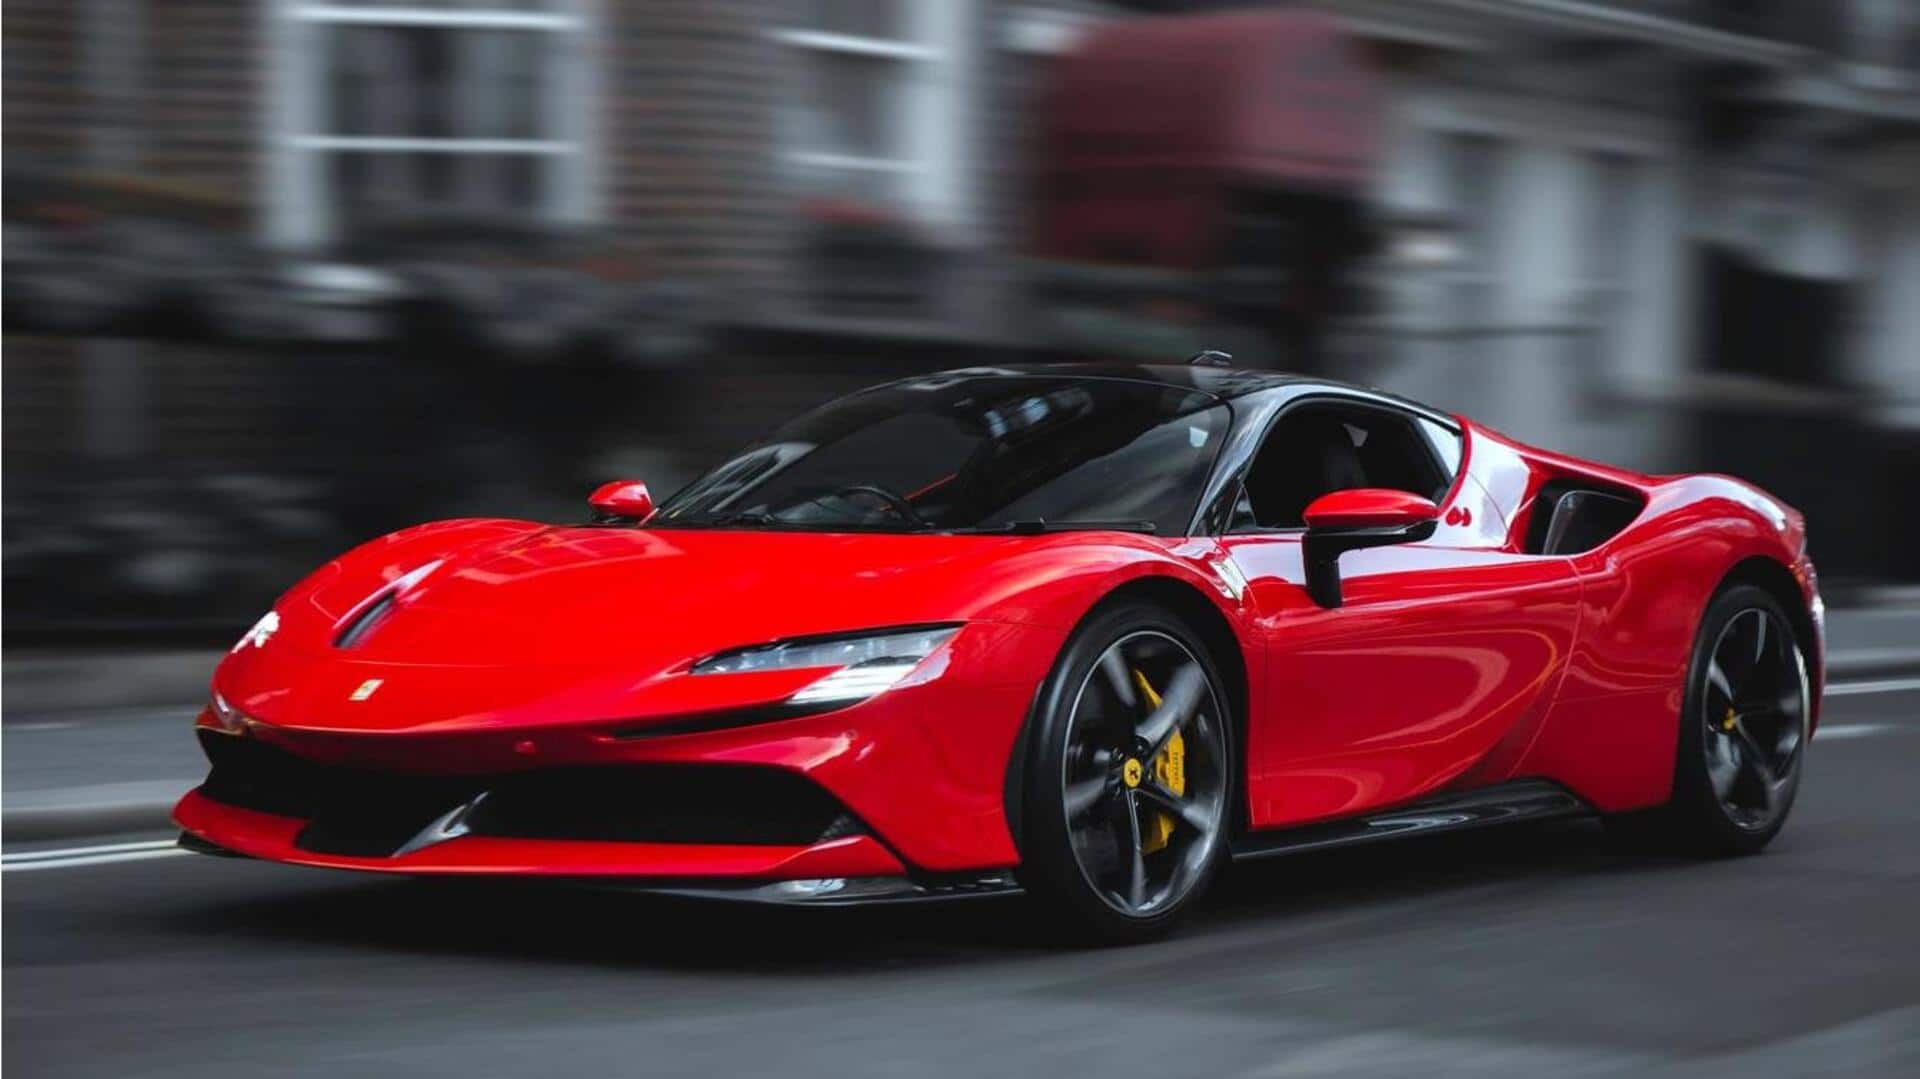 Ferrari's first electric car to cost around ₹4.5 crore